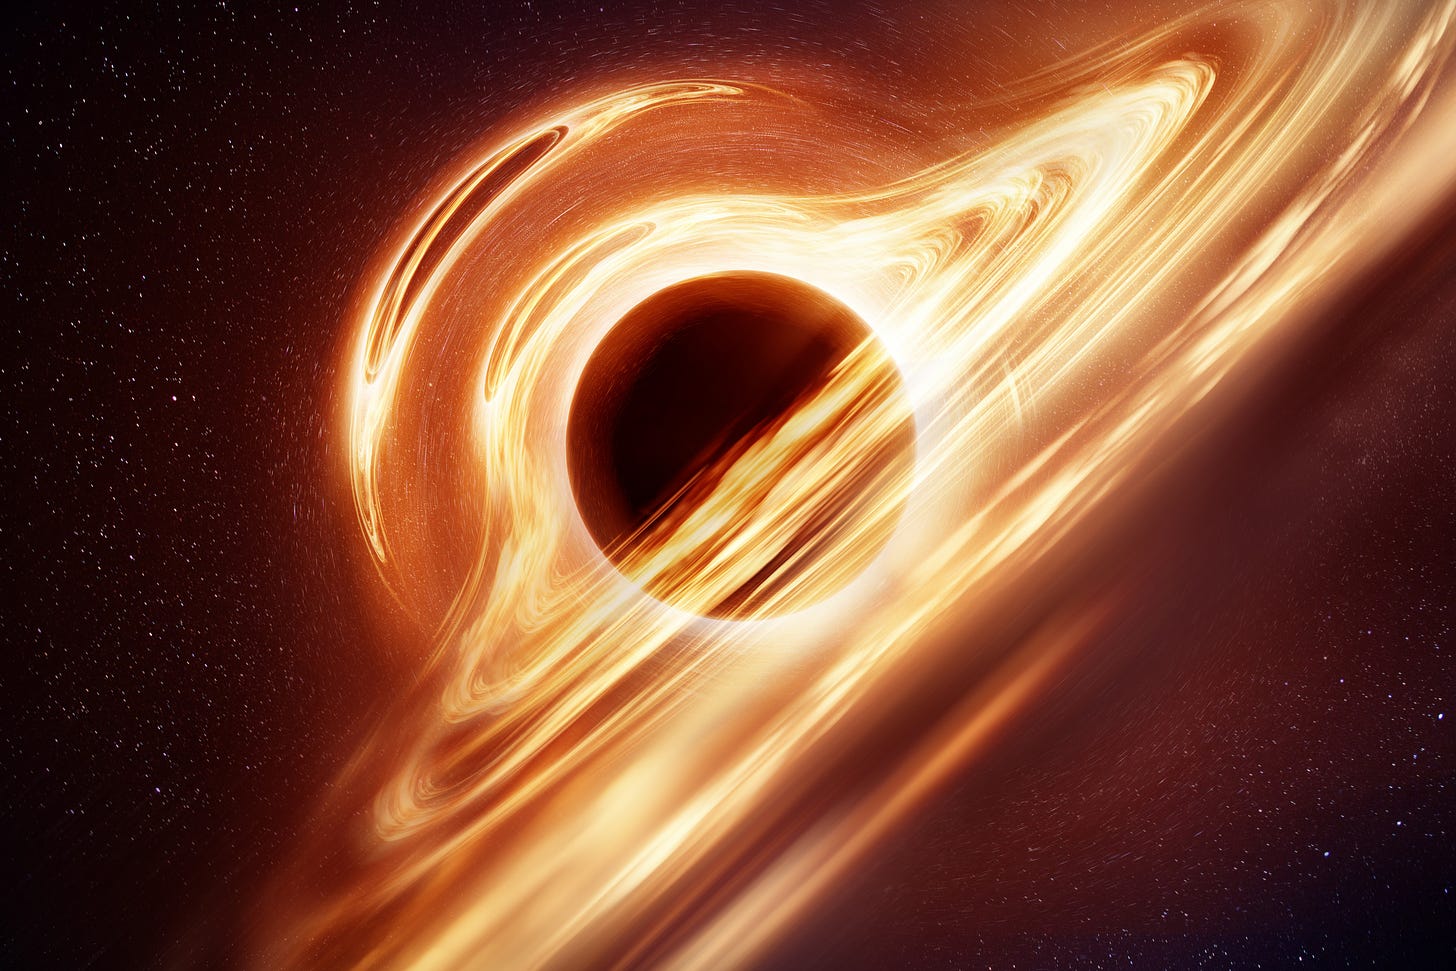 Nasa Black Hole Image - Photographing A Black Hole Nasa - When the eht ...